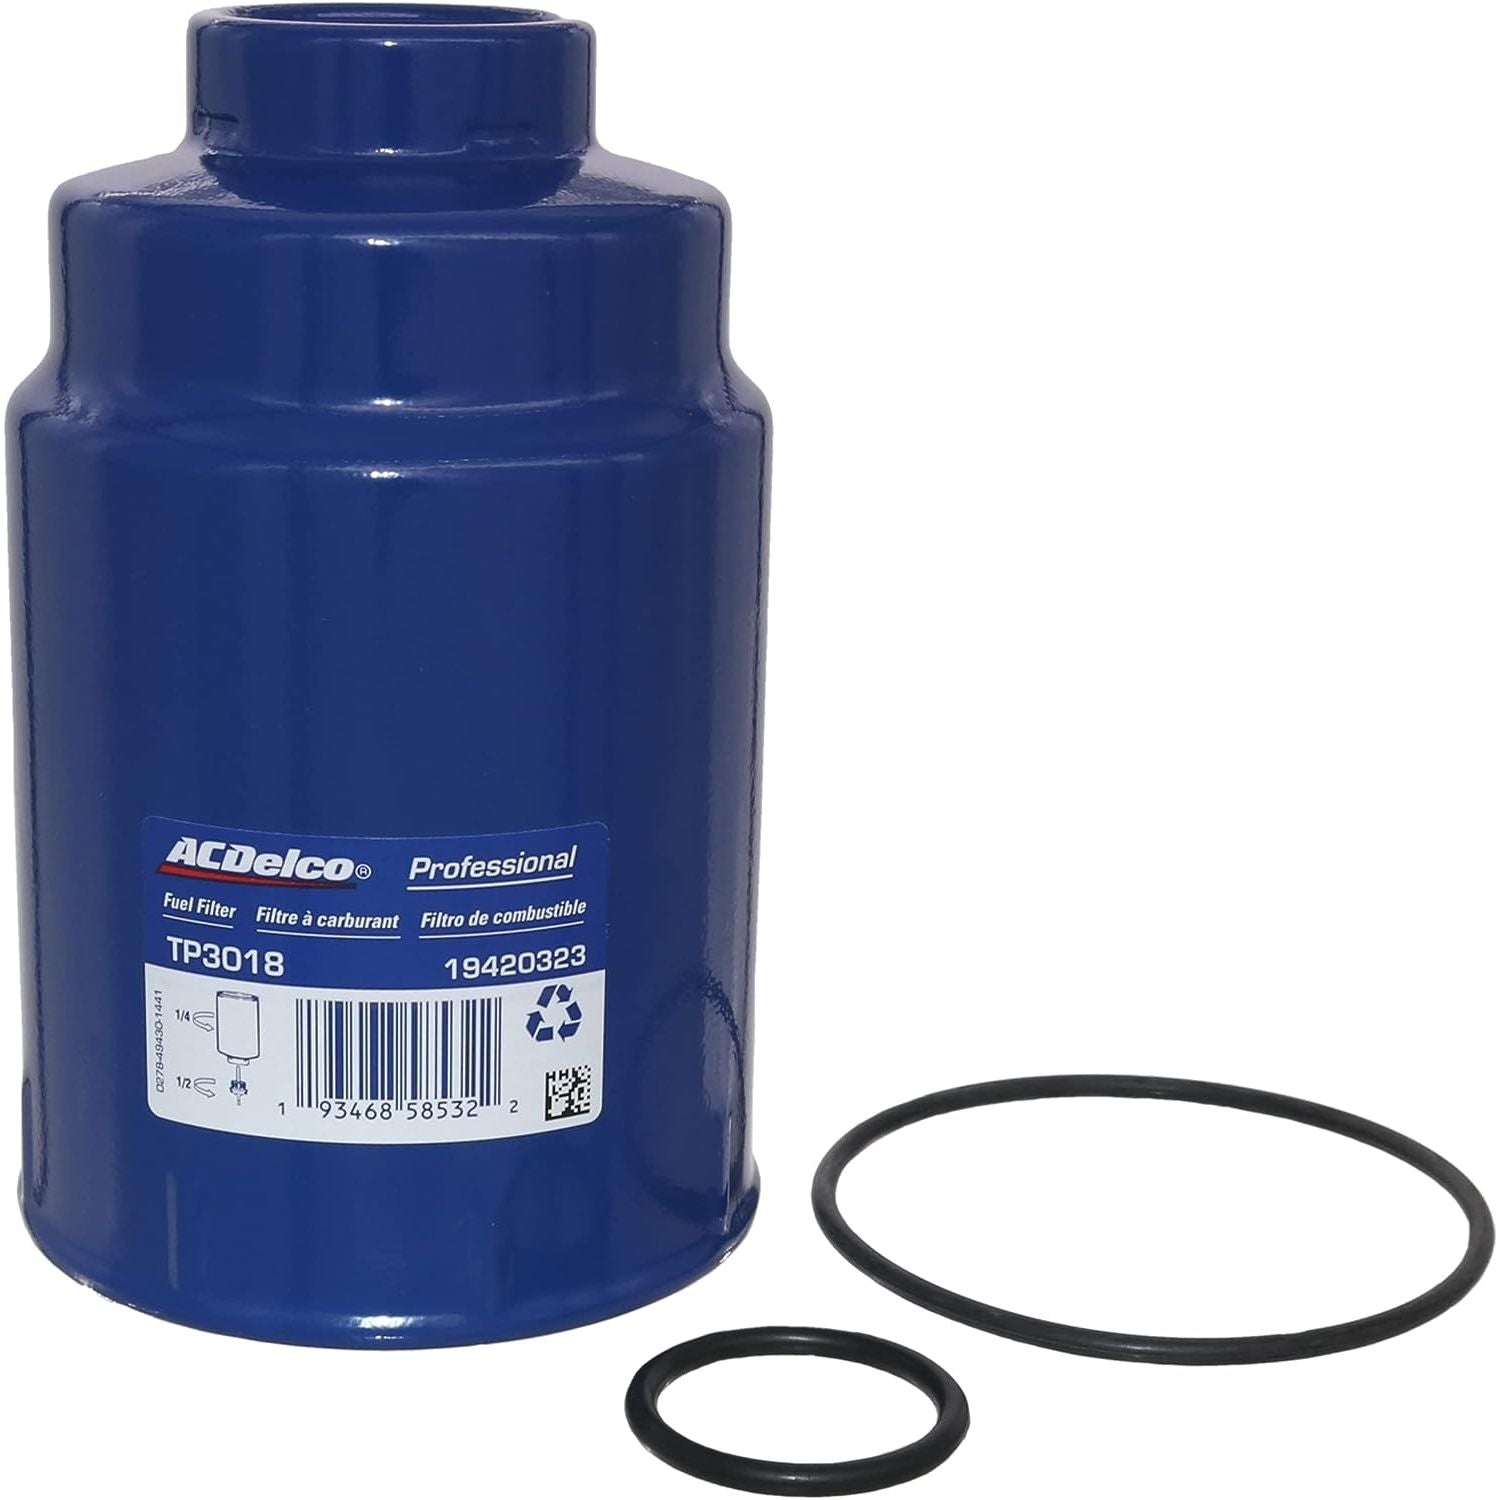 GM Genuine Parts TP3018 Fuel Filter Kit